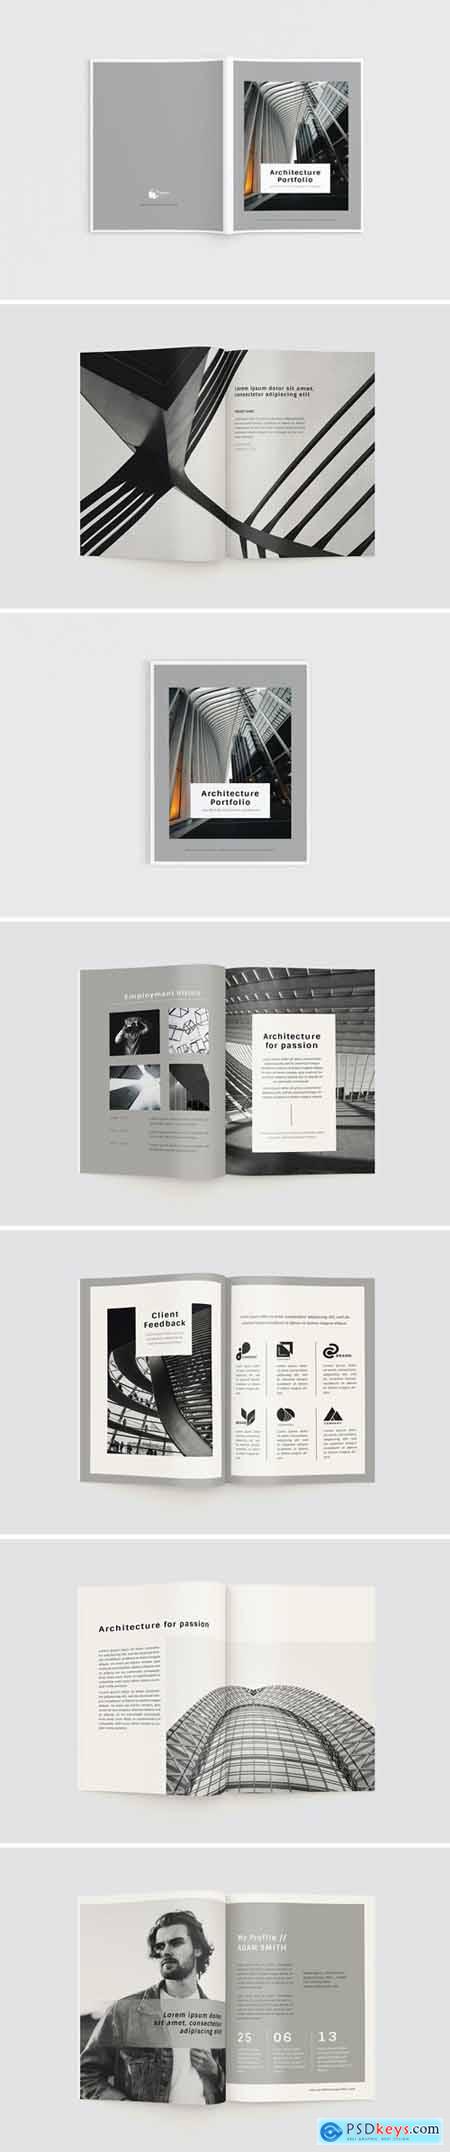 Architecture Portfolio Magazine